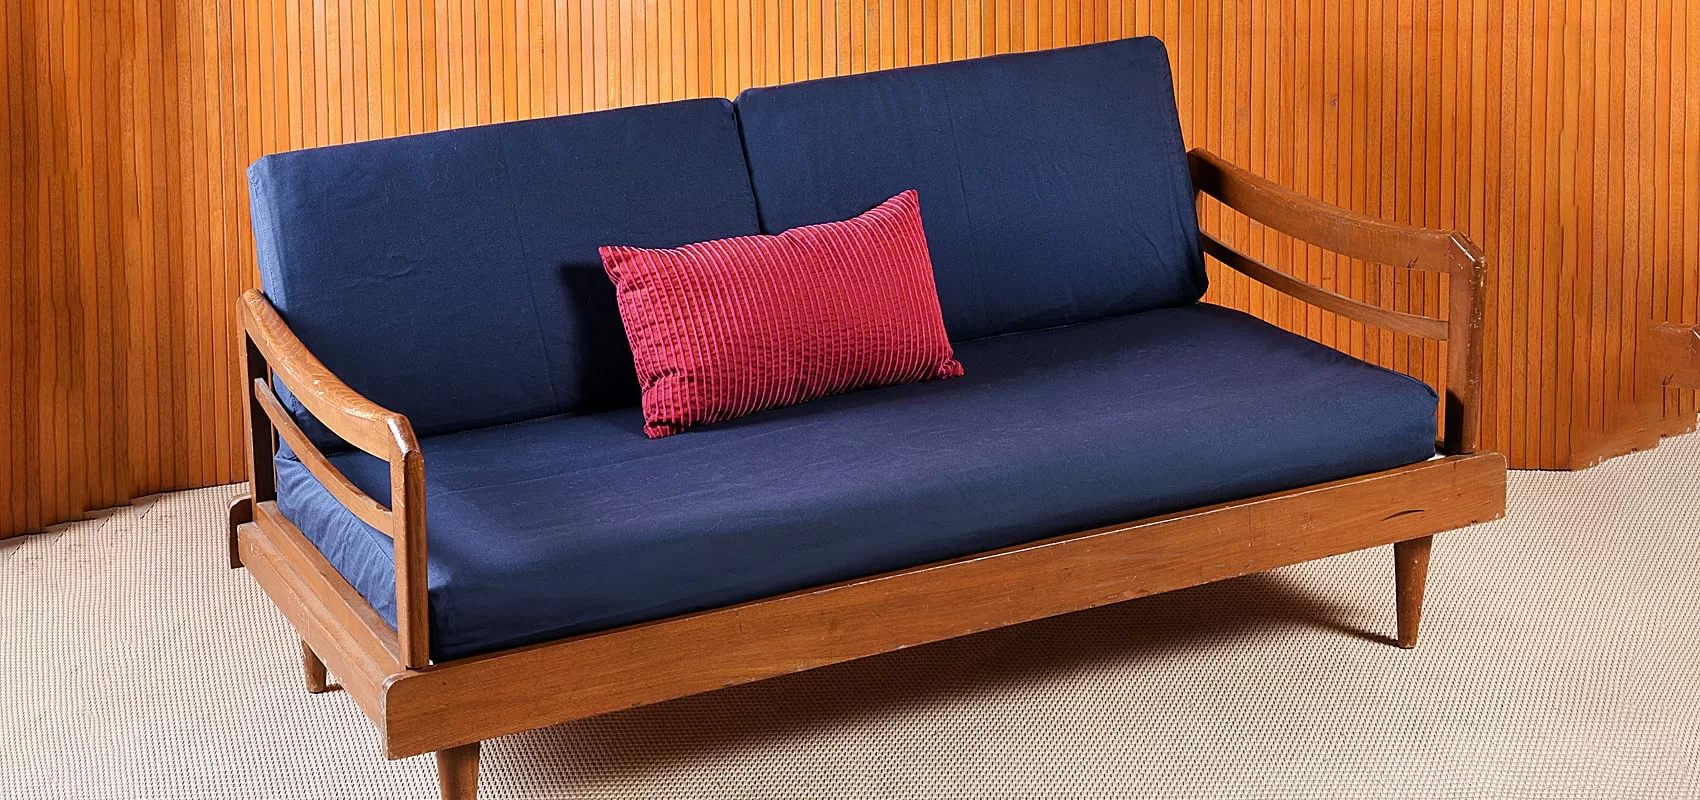 Cushions For Wooden Sofa 1 Min Jpg.webp